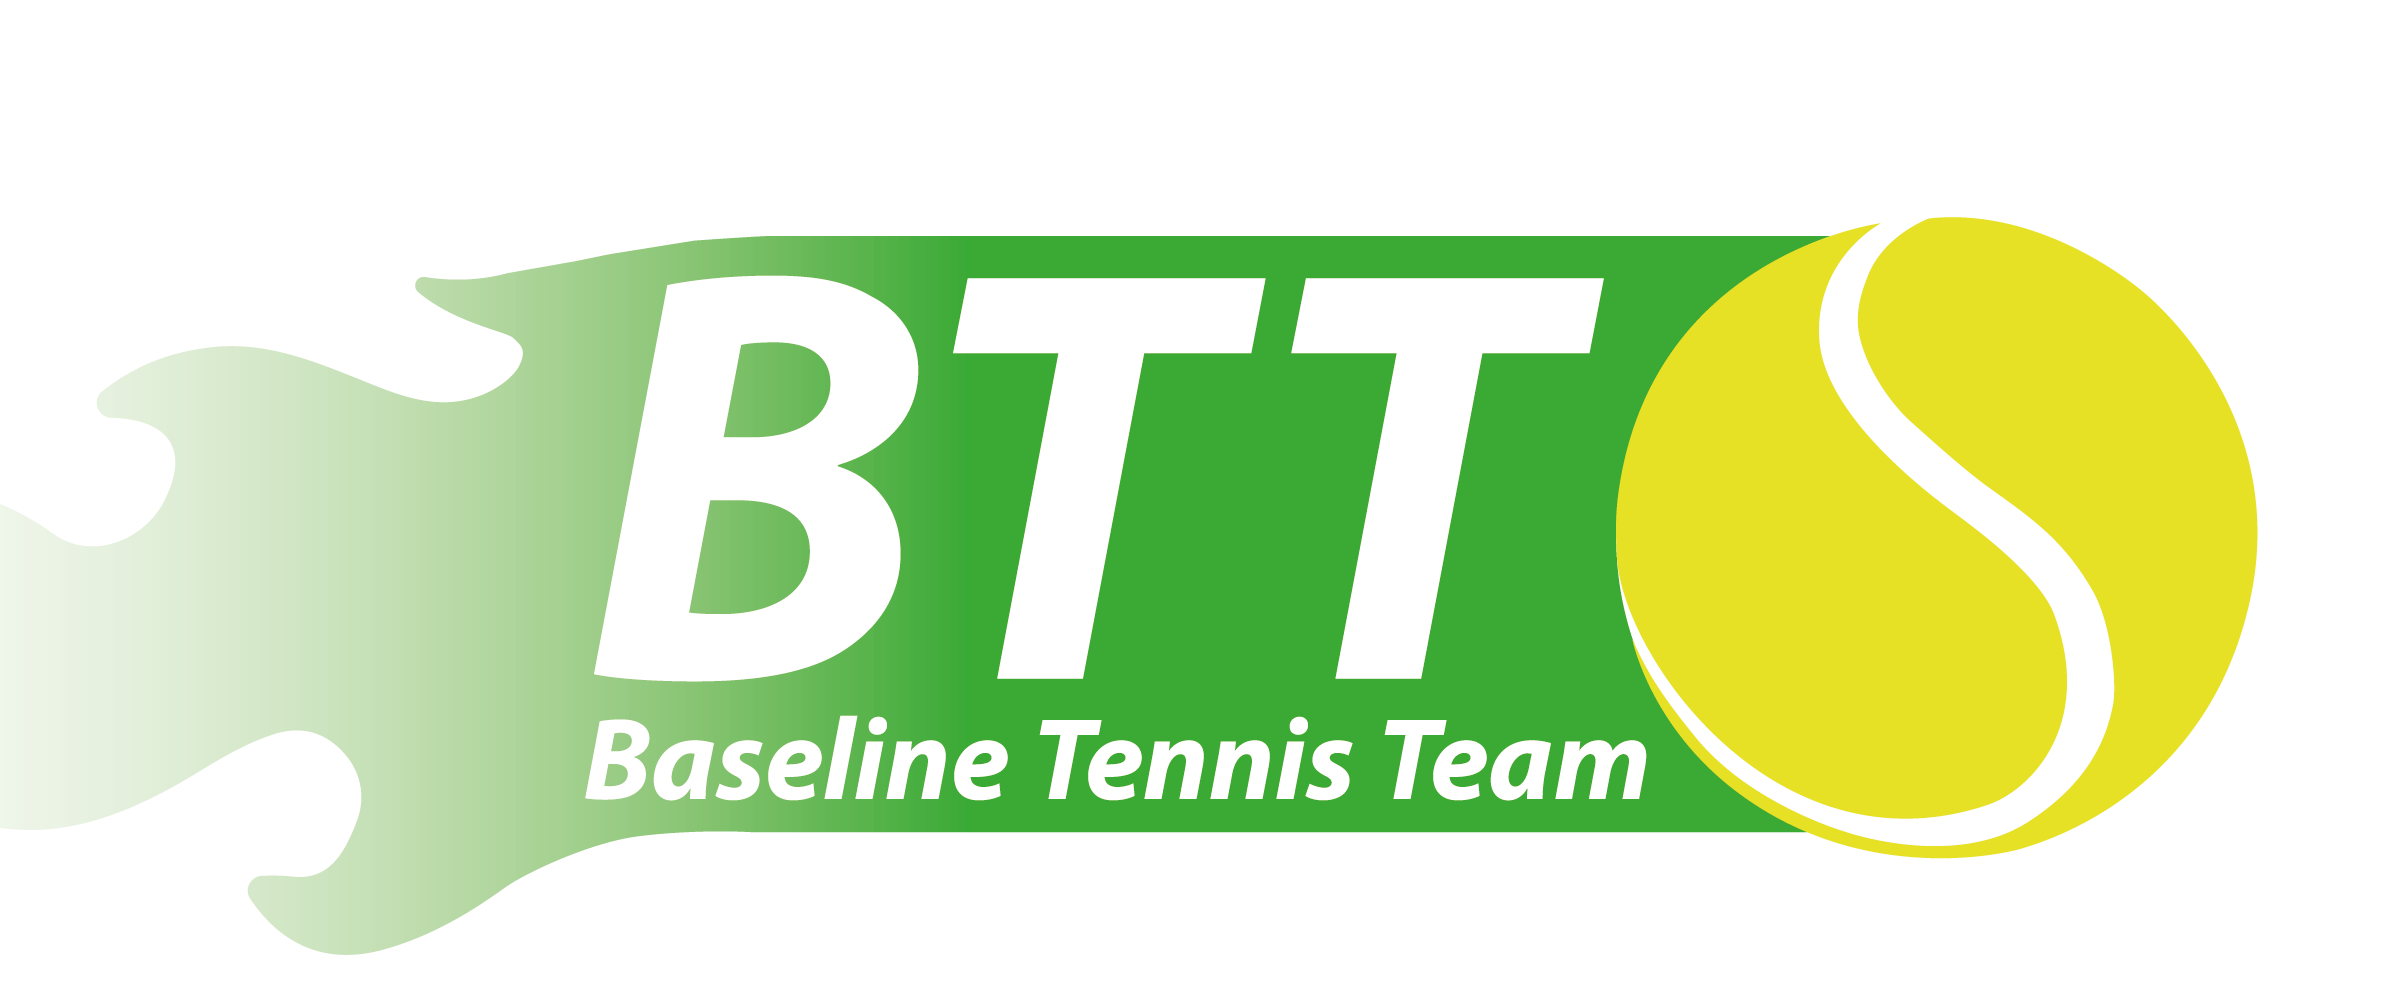 Baseline Tennis Team